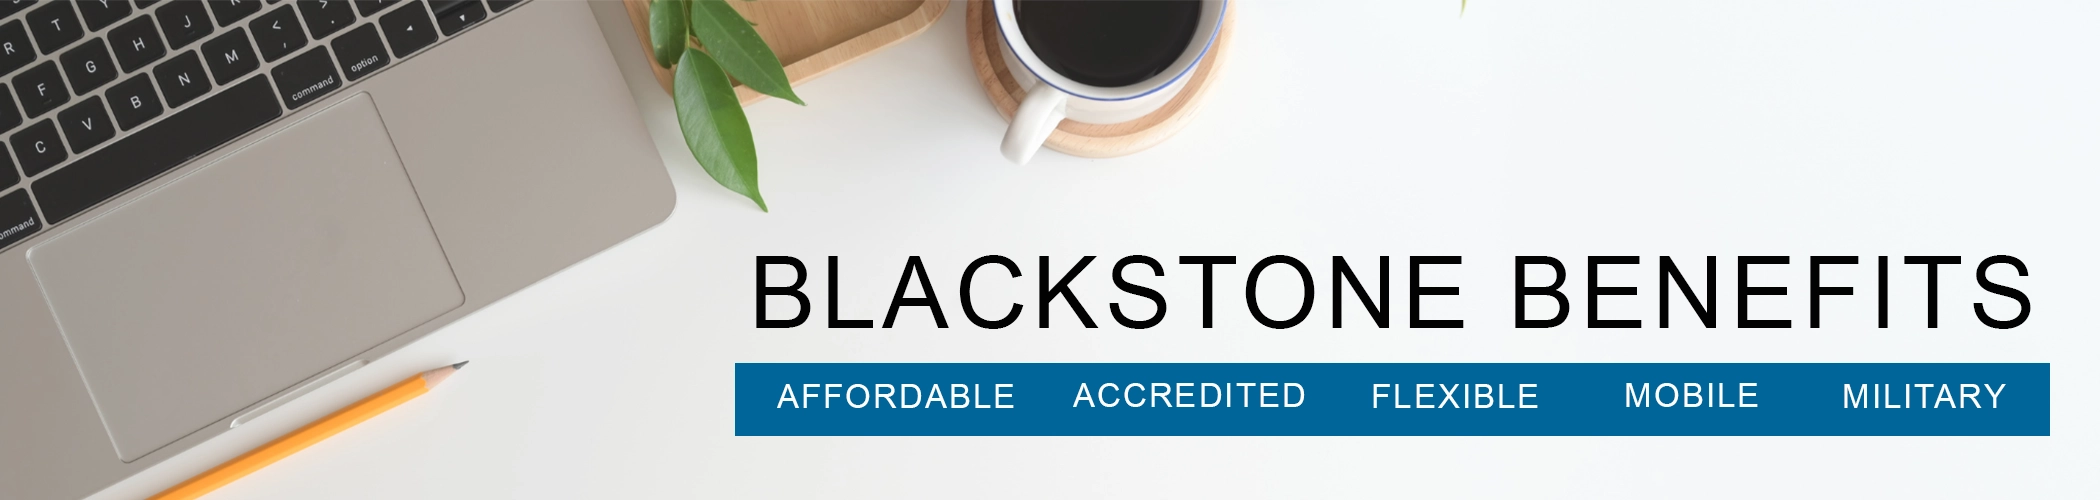 blackstone_benefits